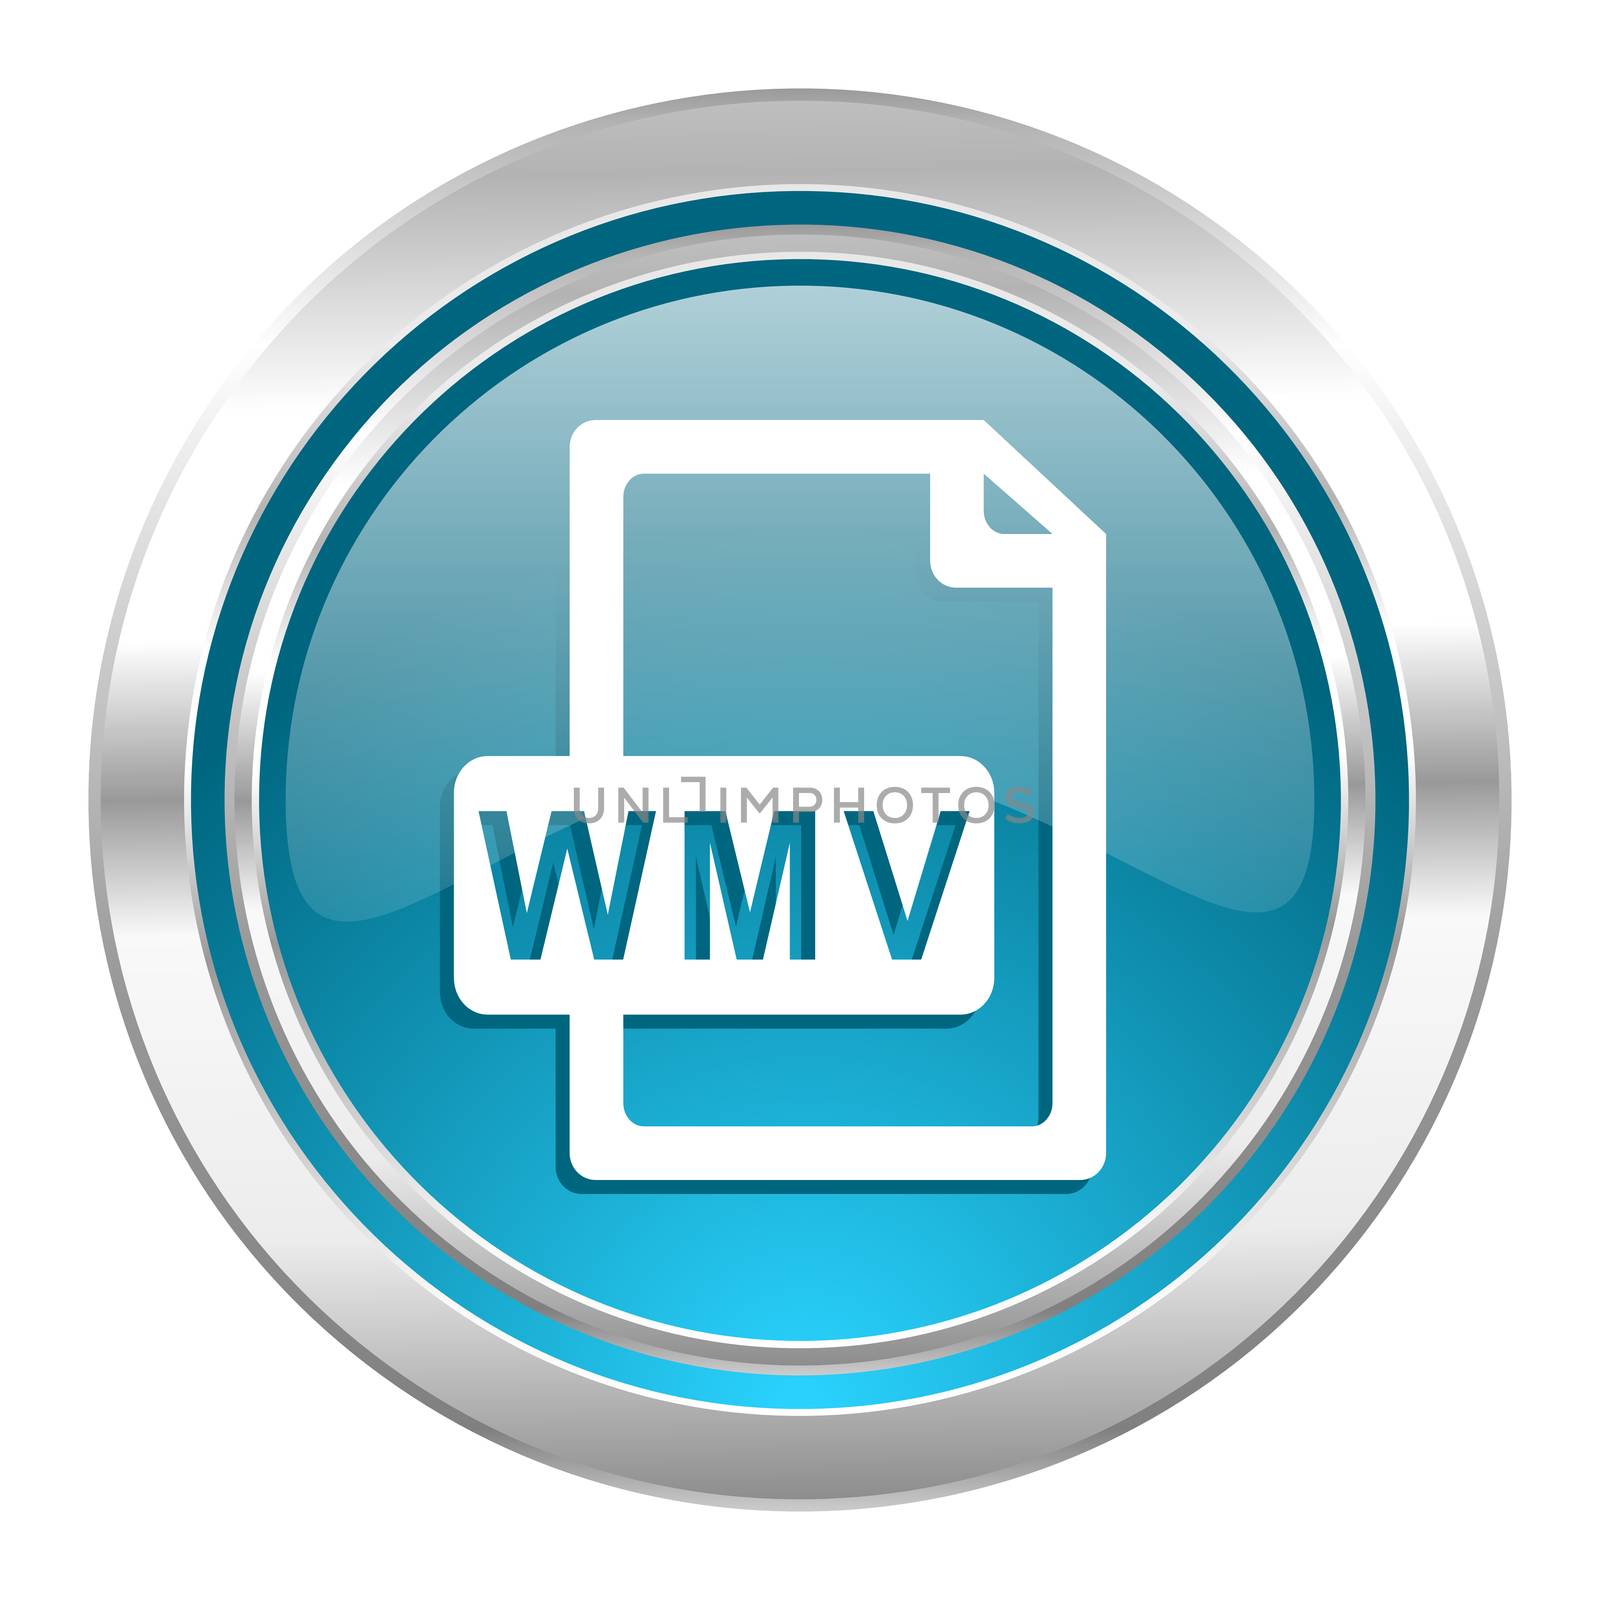 wmv file icon by alexwhite